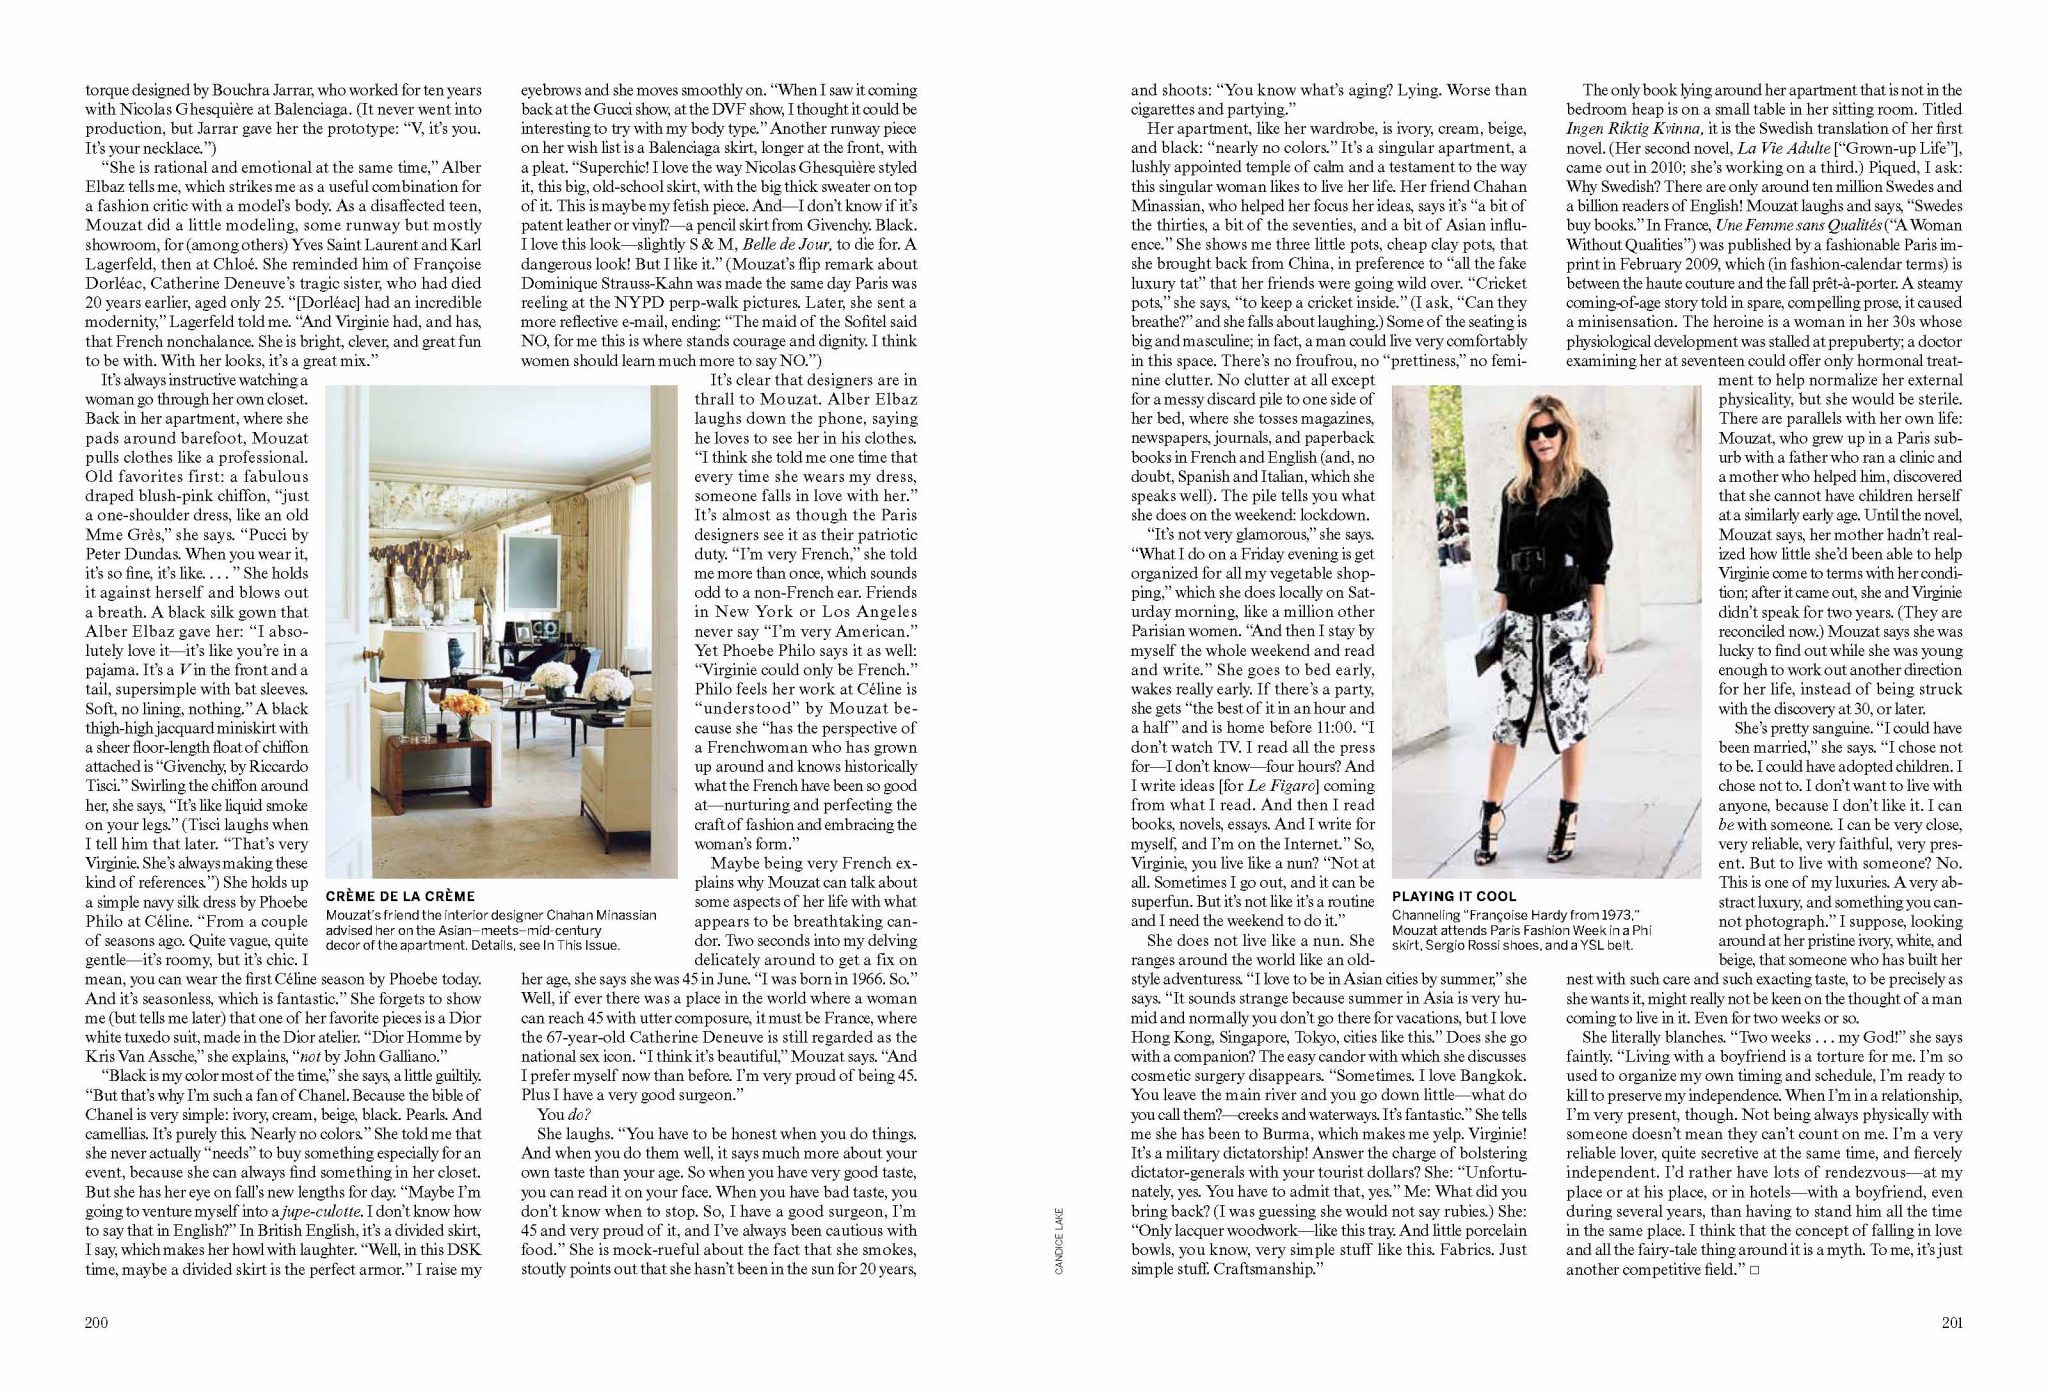 François Halard | Vogue US: A Singular Woman | 2